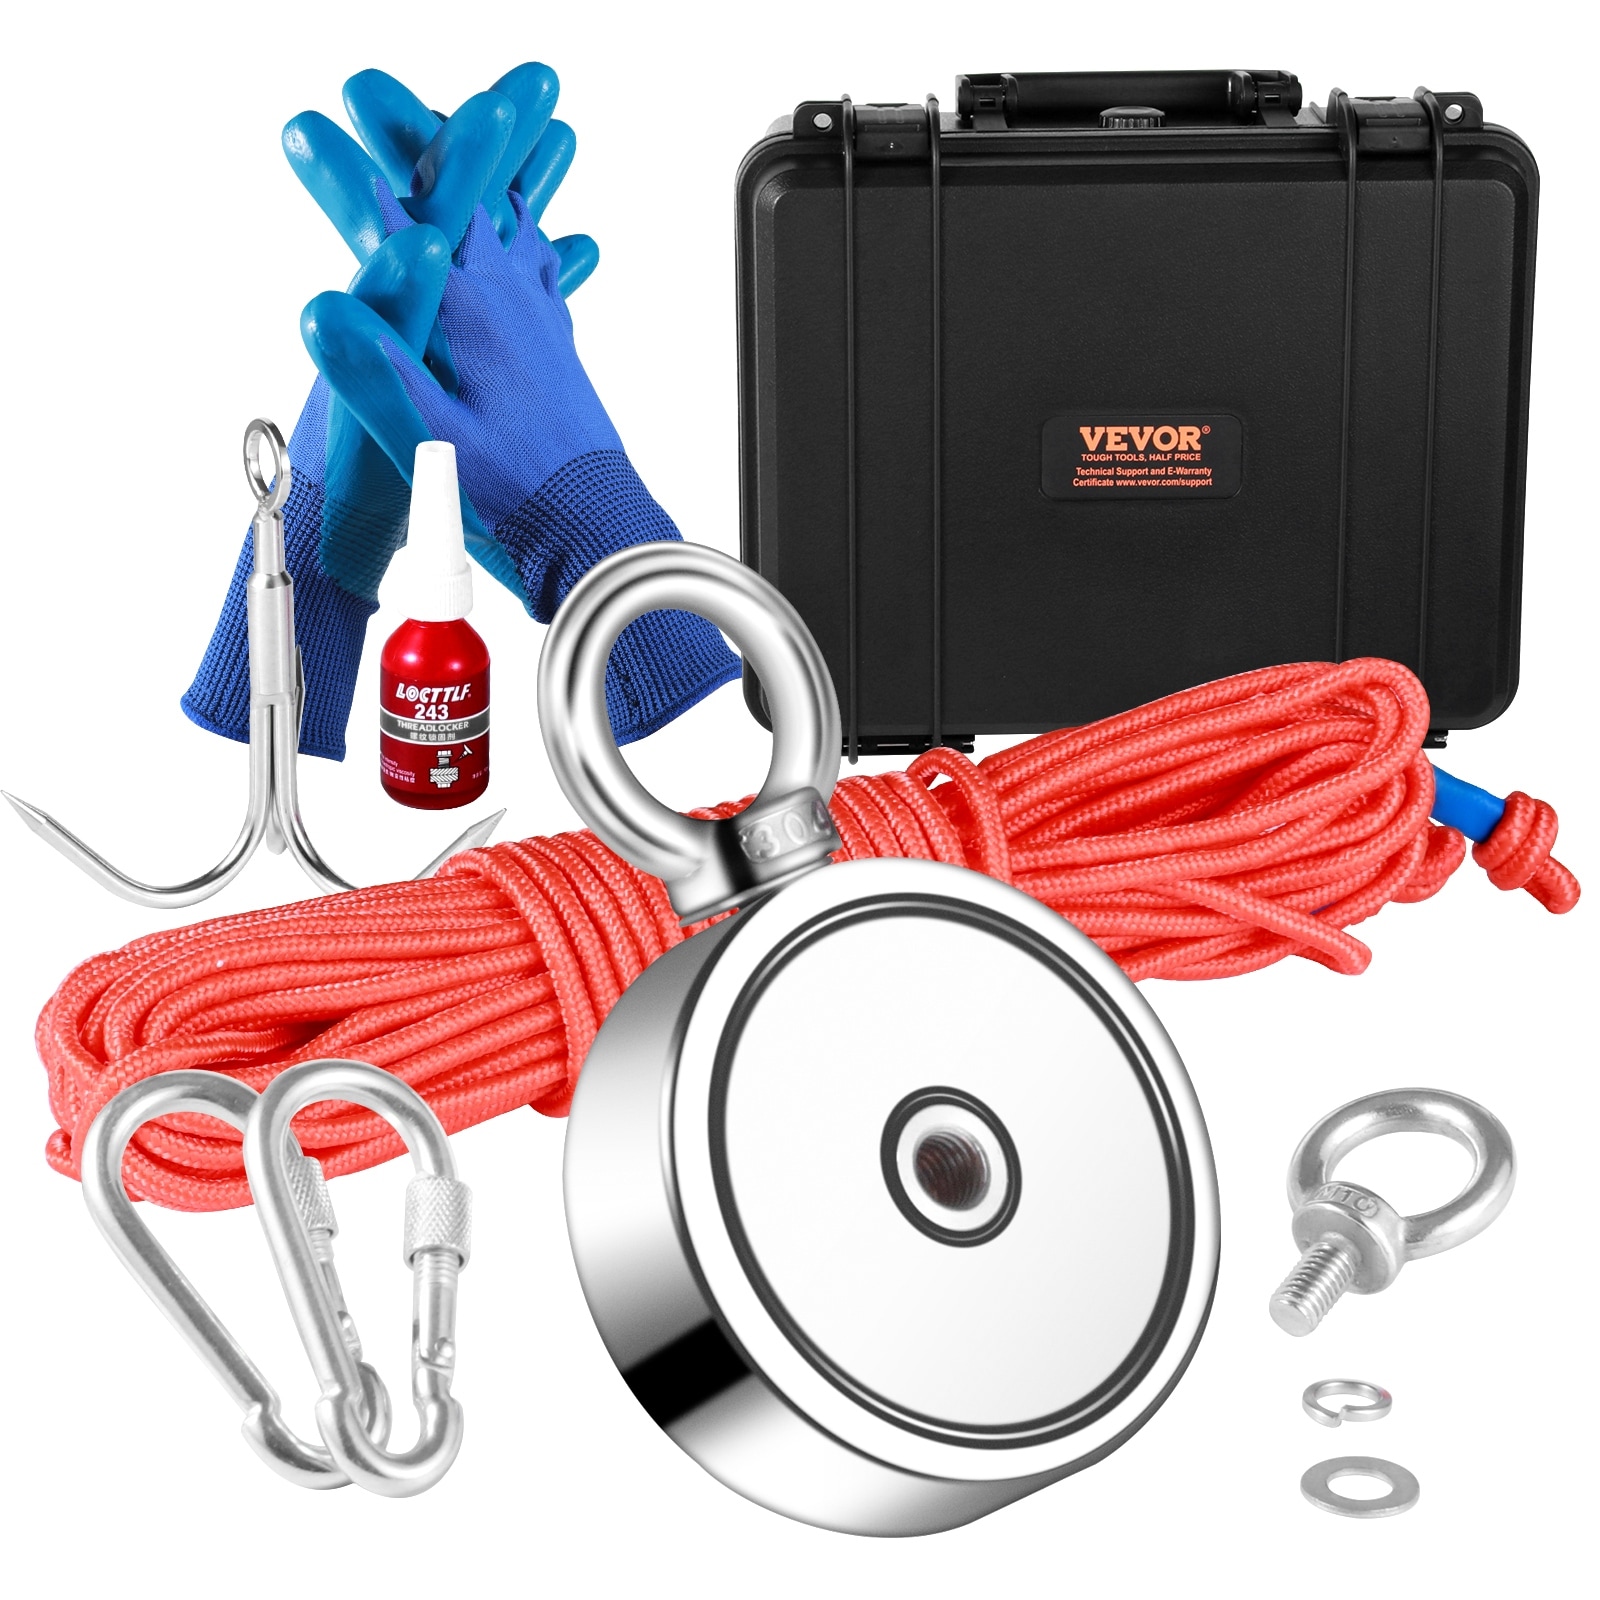 VEVOR Magnet Fishing Kit, 1200lbs,Grappling Hook, Gloves, Waterproof Case,  Threadlocker, Eye Bolt - 2.95 - Bed Bath & Beyond - 39851146